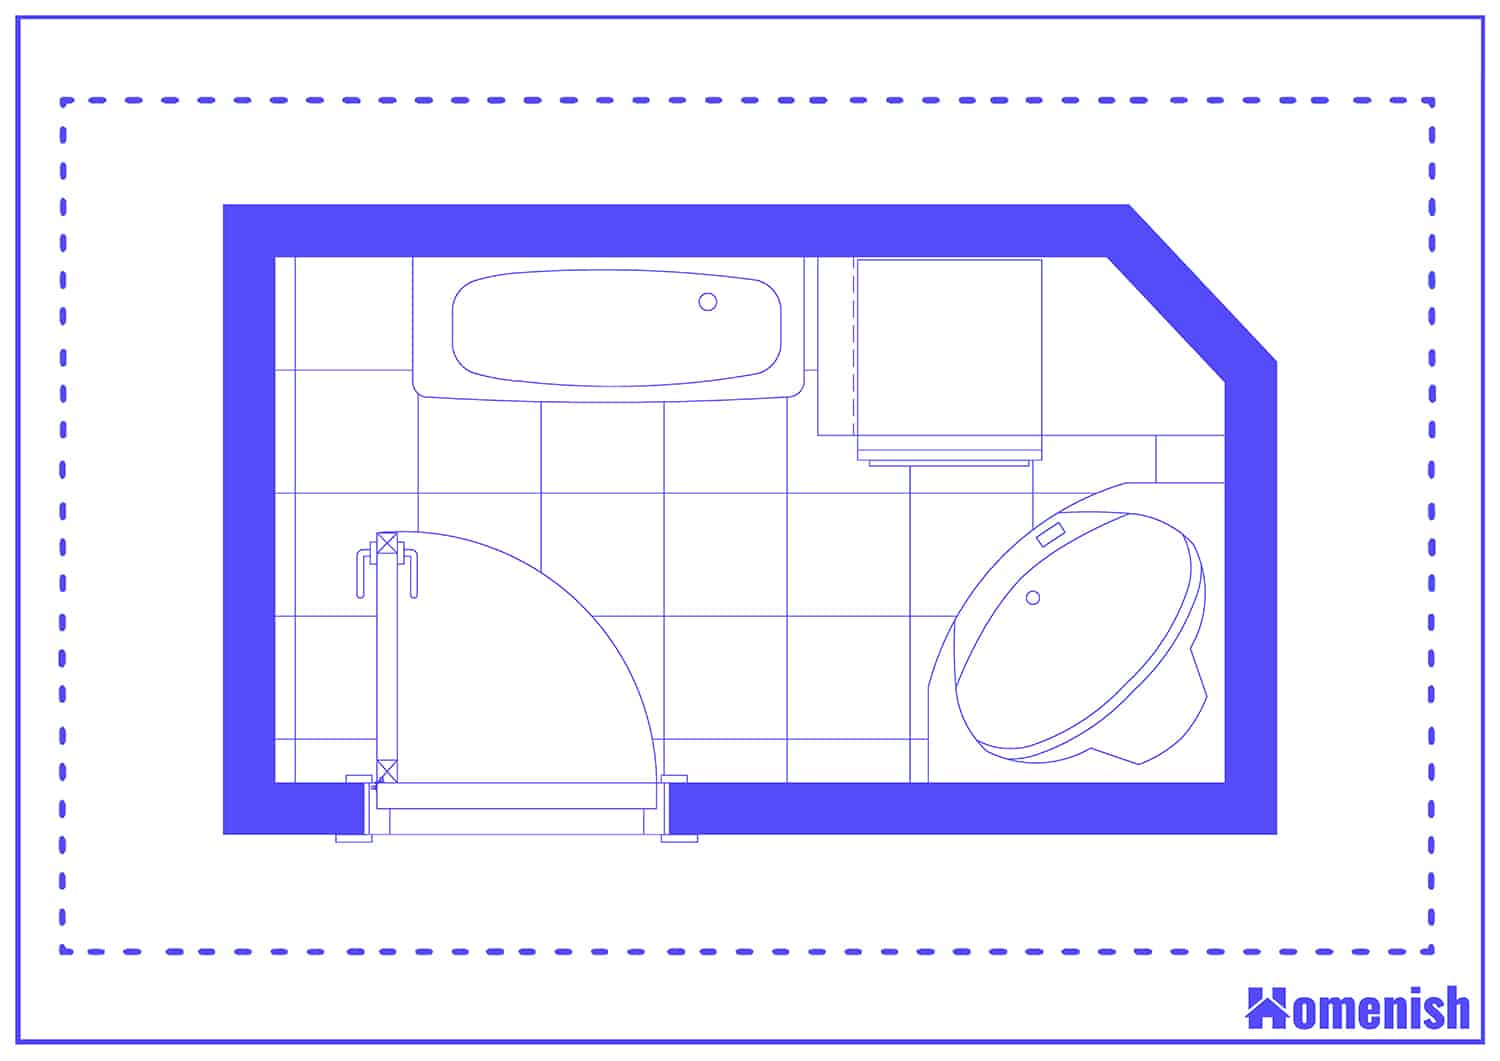 Sleek Jacuzzi Bathroom with Laundry Space Floor Plan